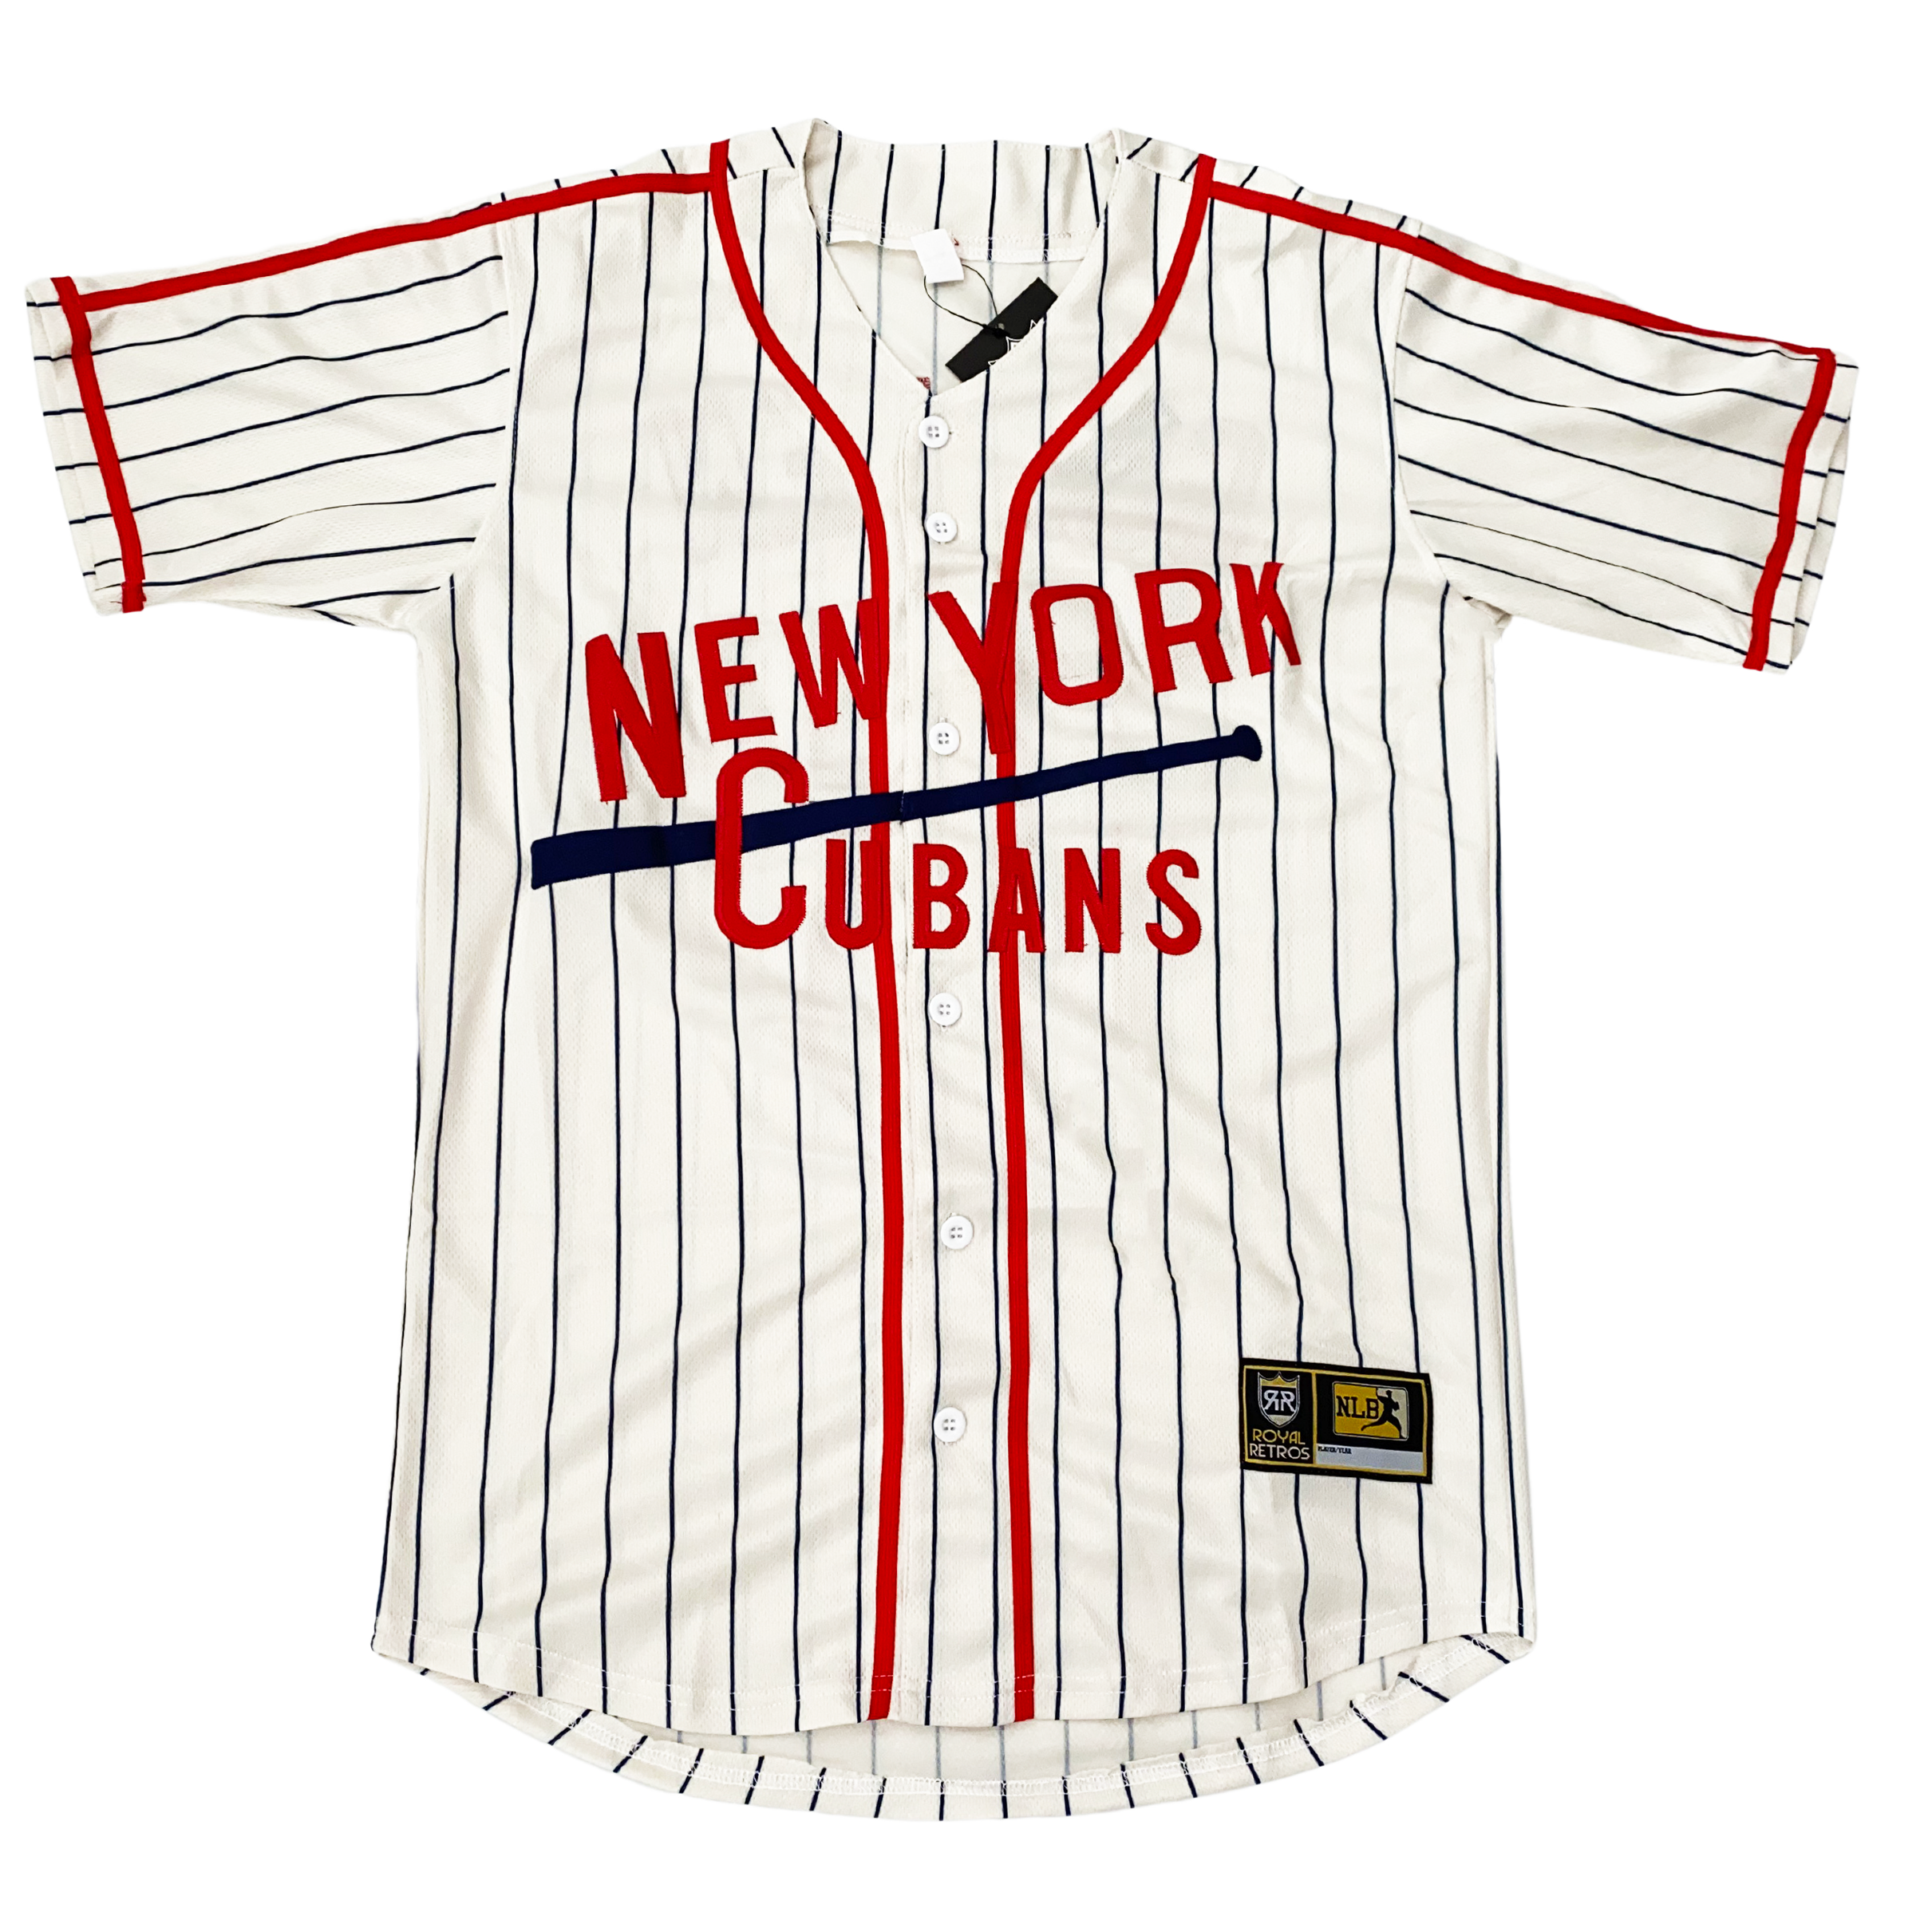 New York Cubans NLB Jersey, XL / Cream